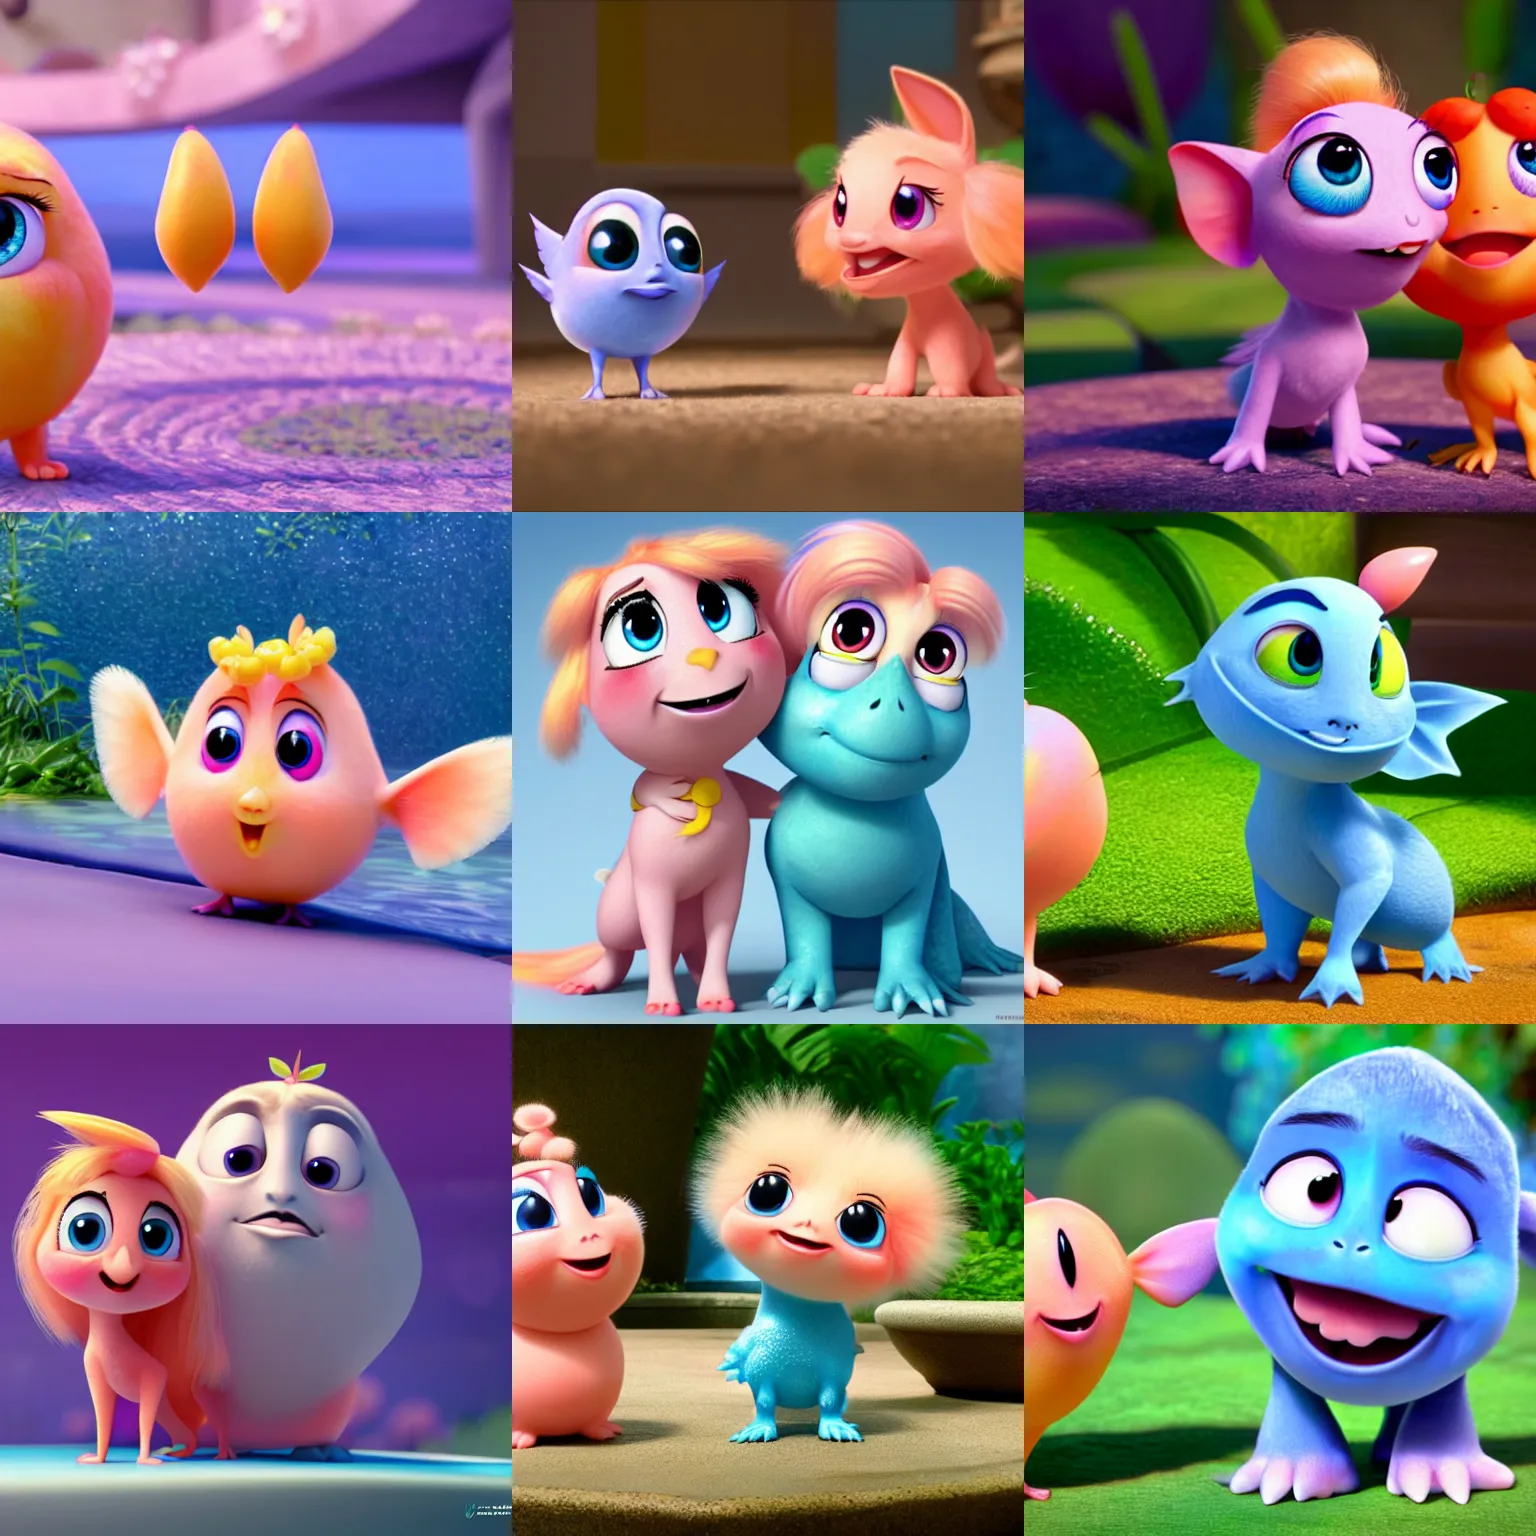 Prompt: cute peachy and watermely being friends, pixar, cgi, 4 k, vivid, symmetrical, hyperdetailed